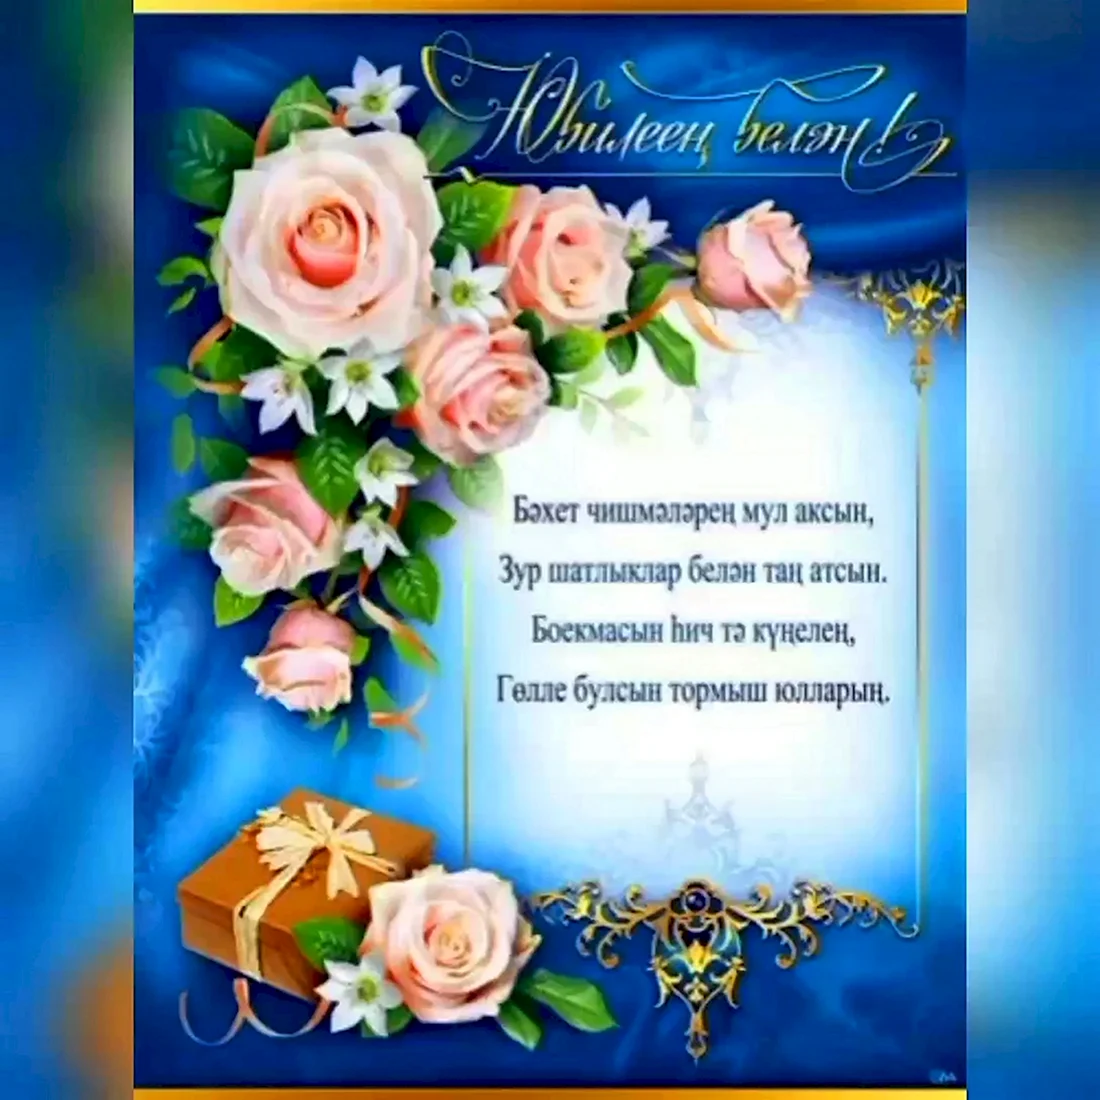 Татарские поздравления с днем рождения. Поздравление на праздник